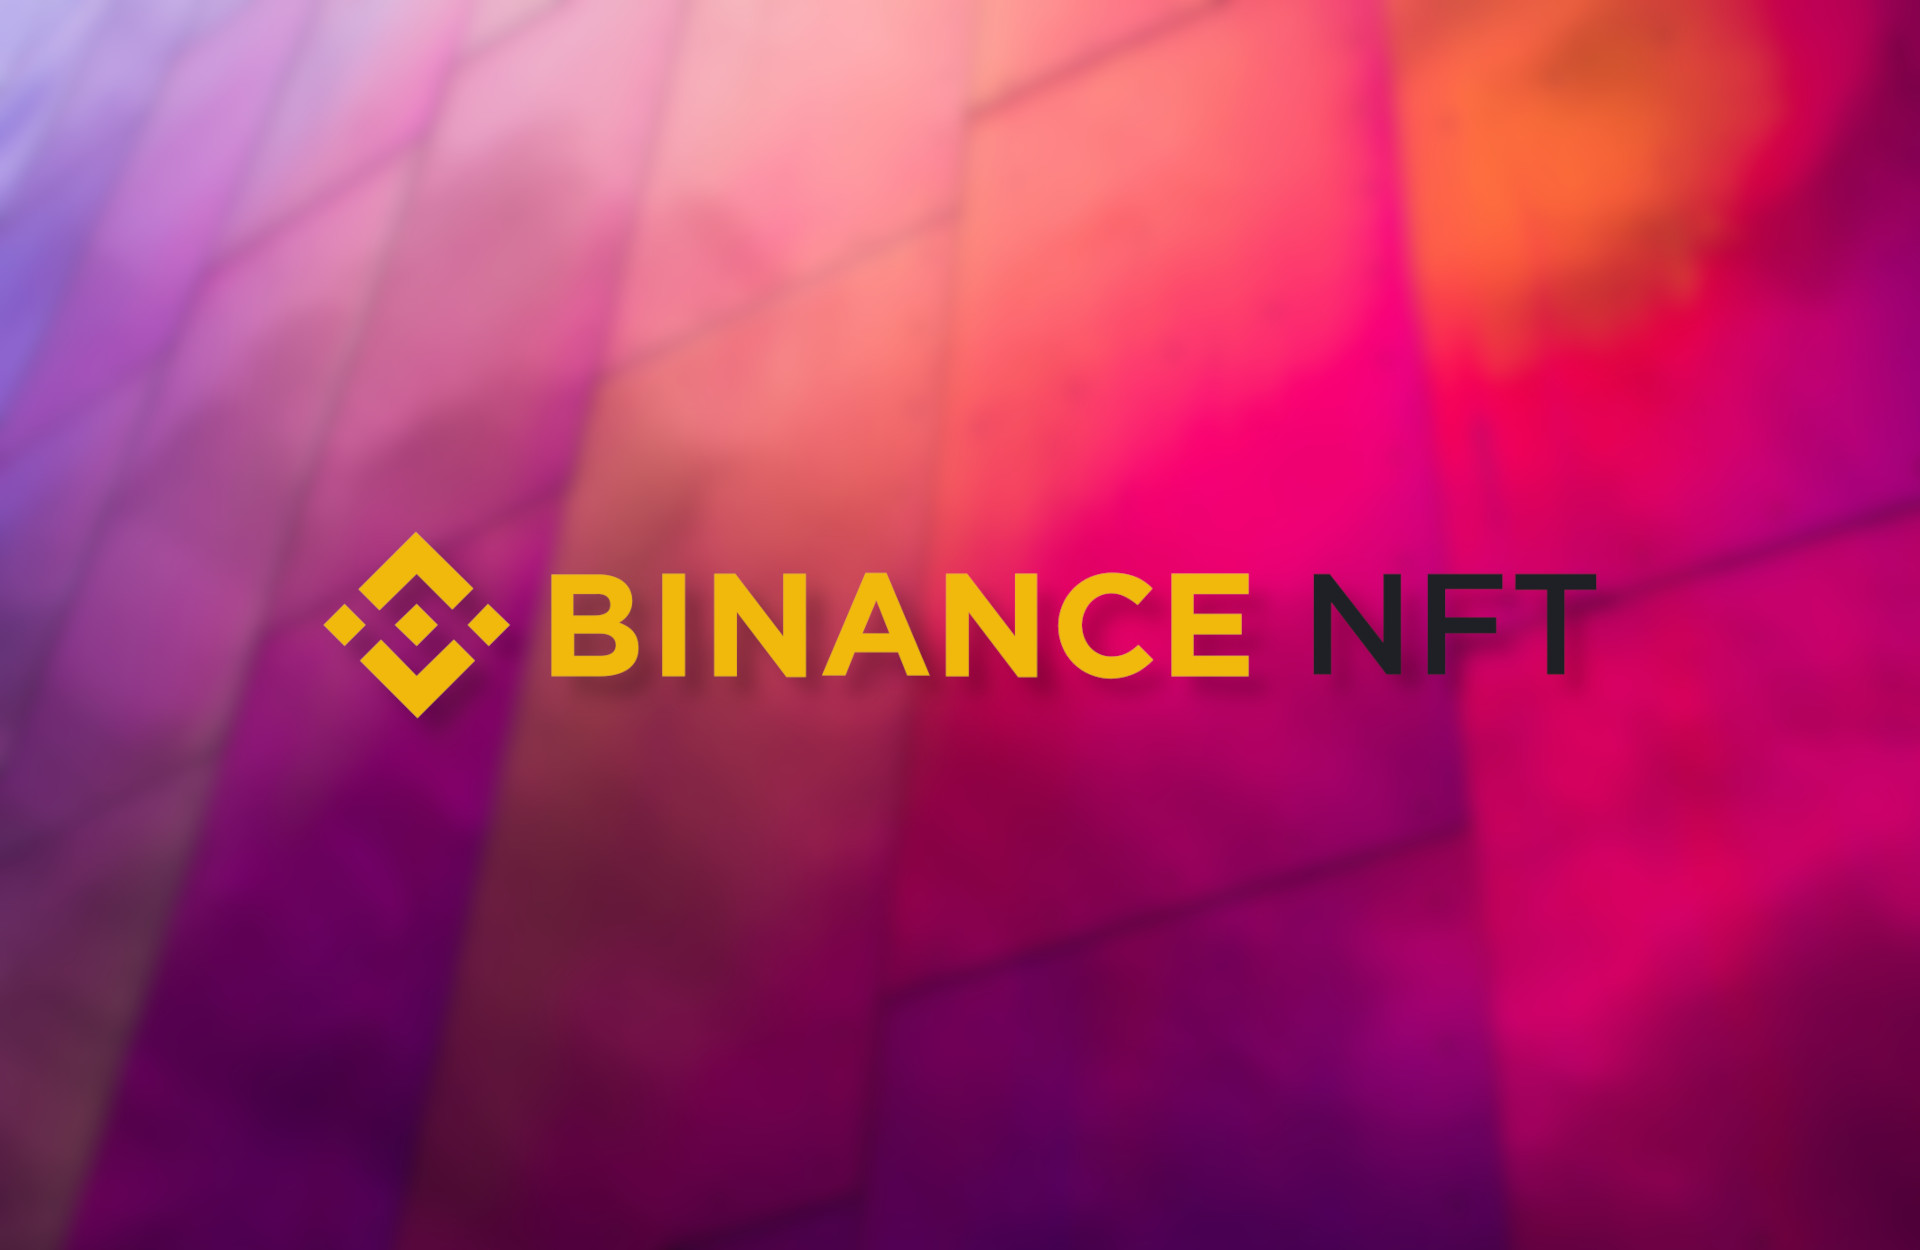 Binance NFT cover image